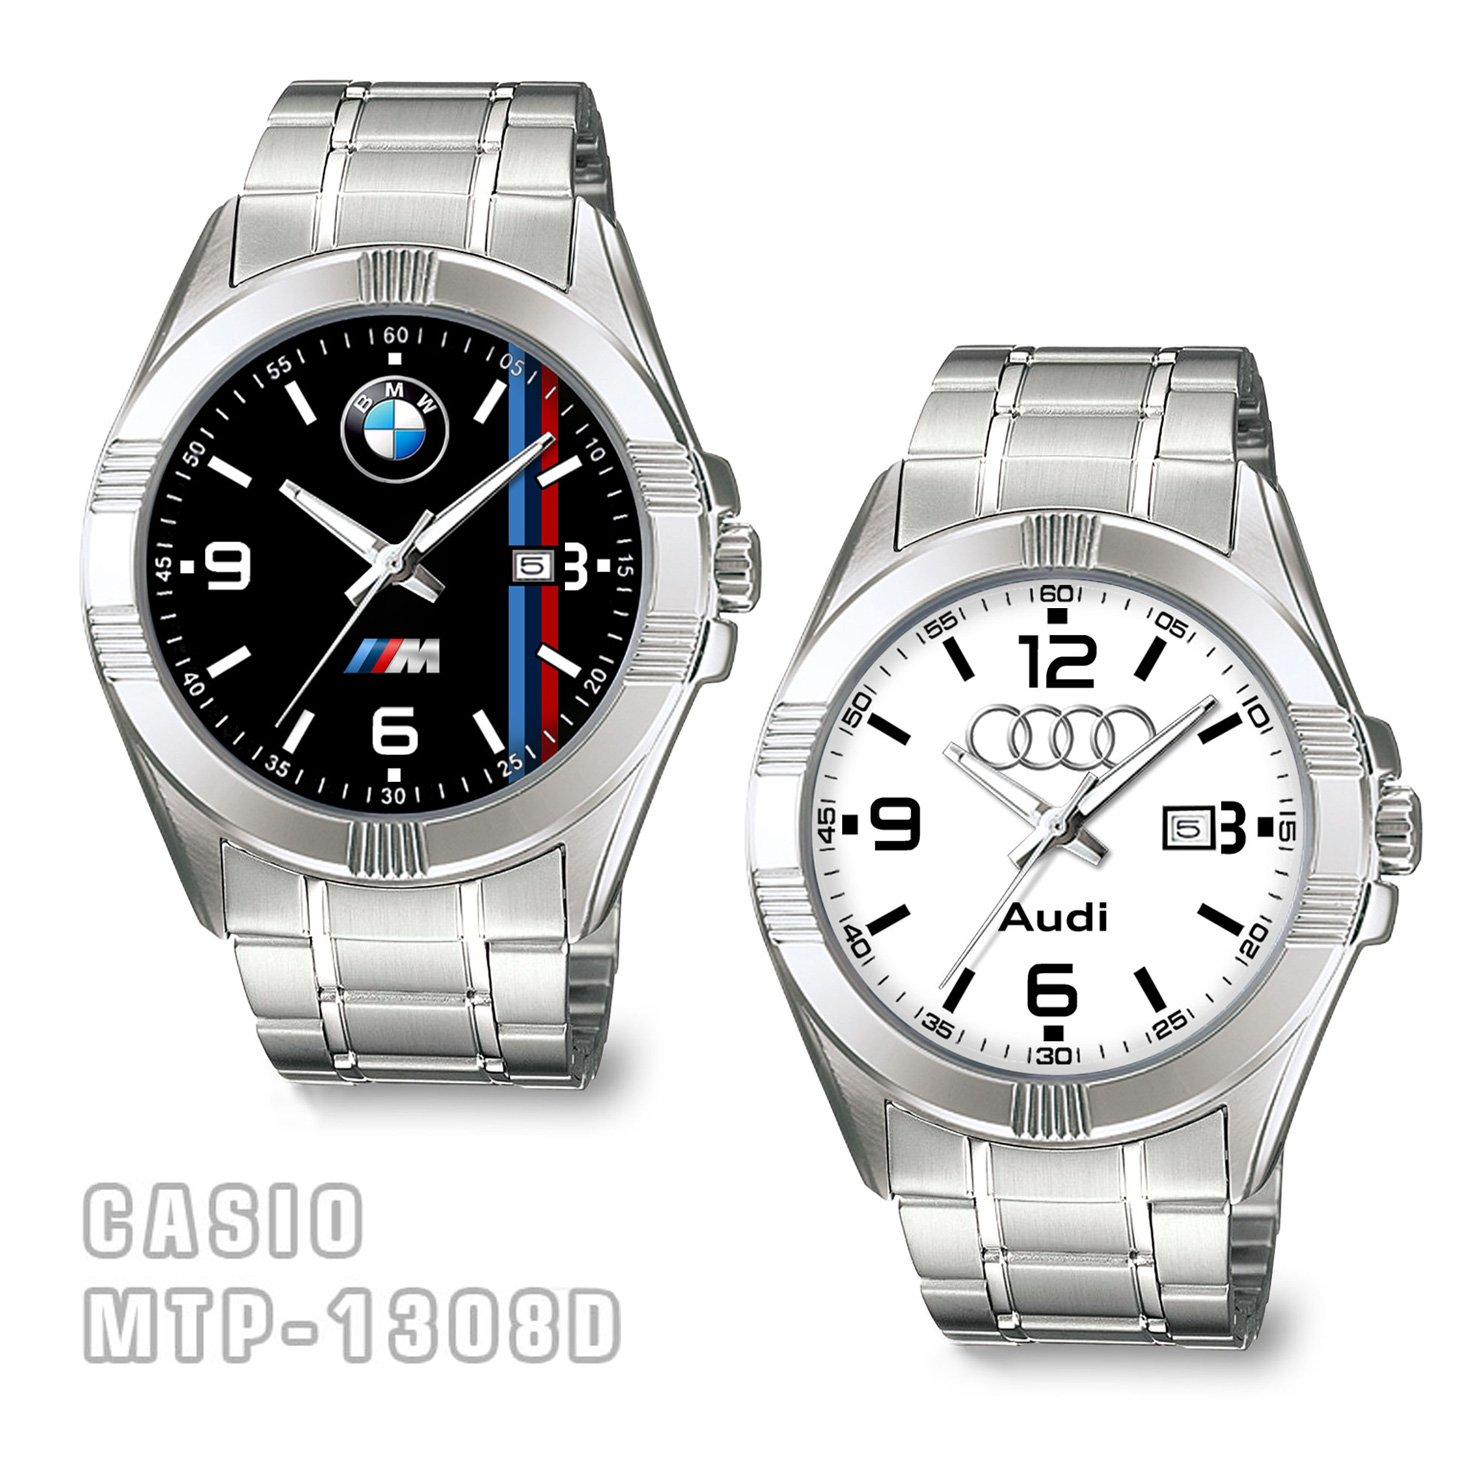 Casio MTP-1308D - Ručni muški reklamni promotivni sat